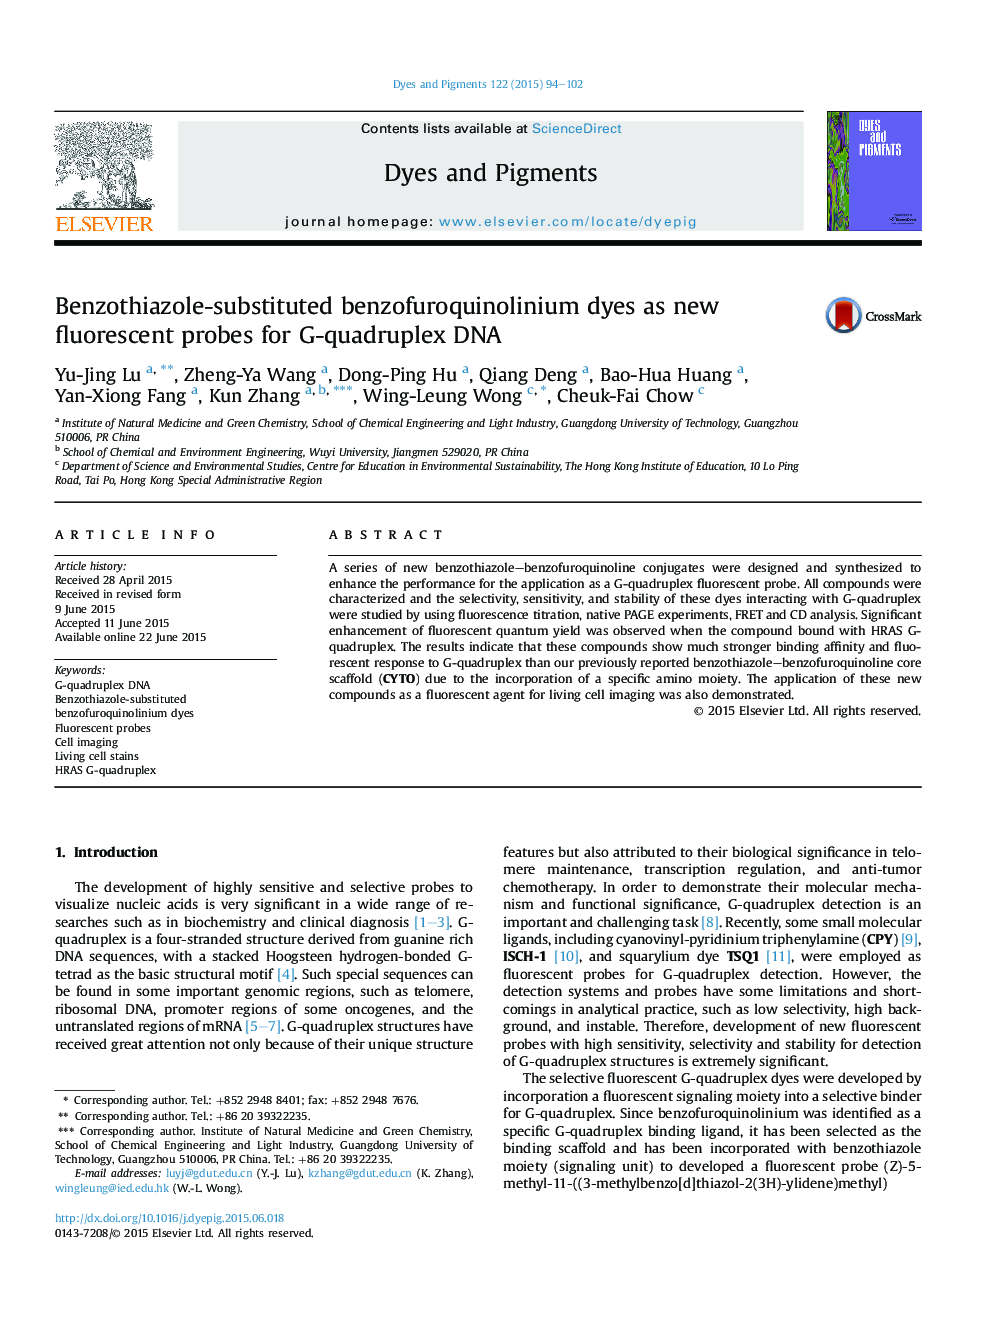 Benzothiazole-substituted benzofuroquinolinium dyes as new fluorescent probes for G-quadruplex DNA